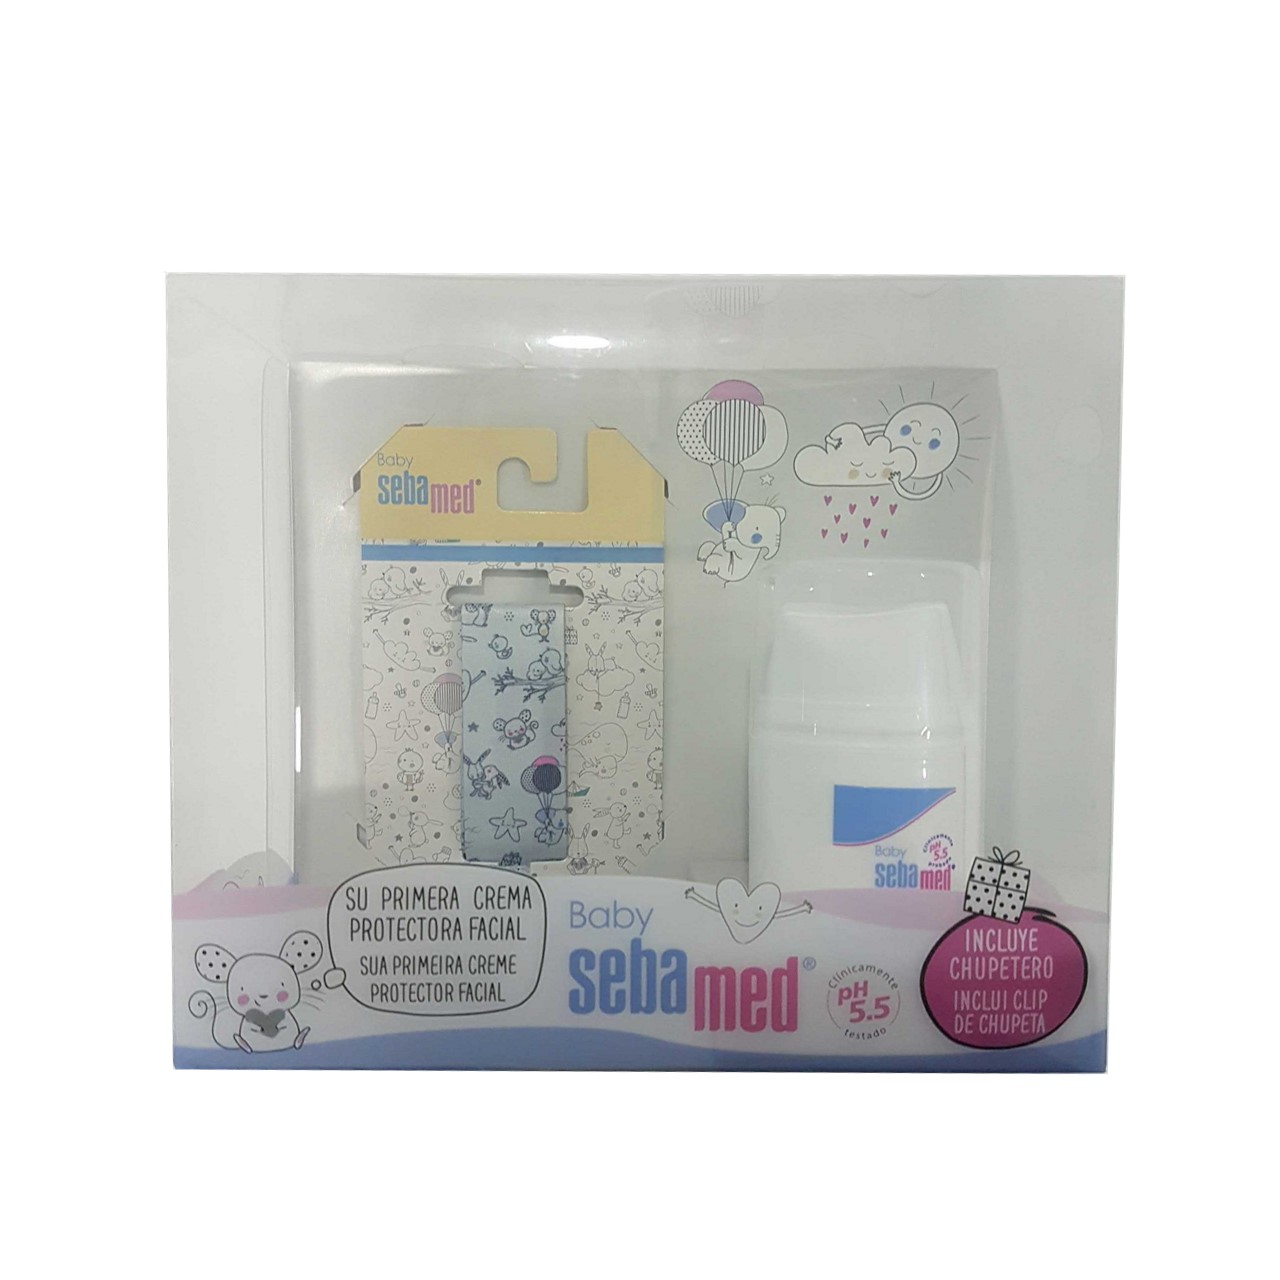 SEBAMED : BABY SEBAMED BABY BUBBLE BATH (PUMP) 1000 ml. + Baby Gift Set